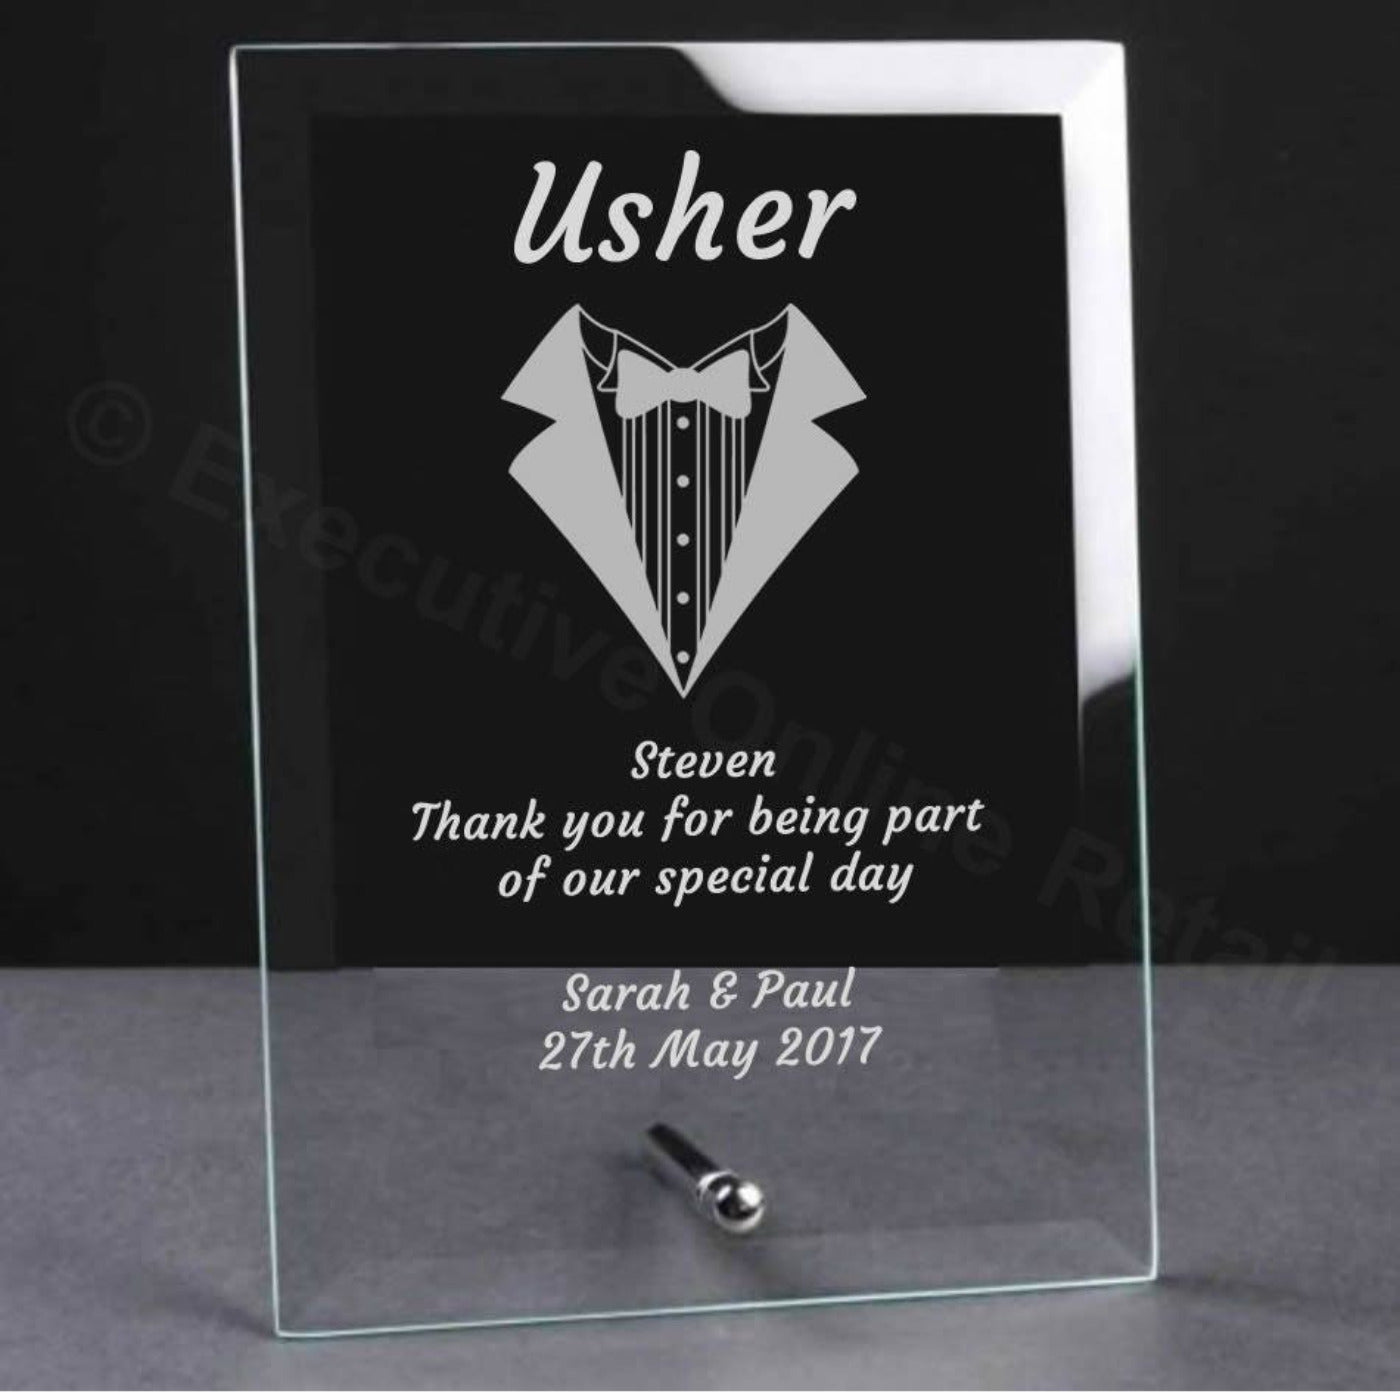 Engraved Wedding Glass Plaque - Usher